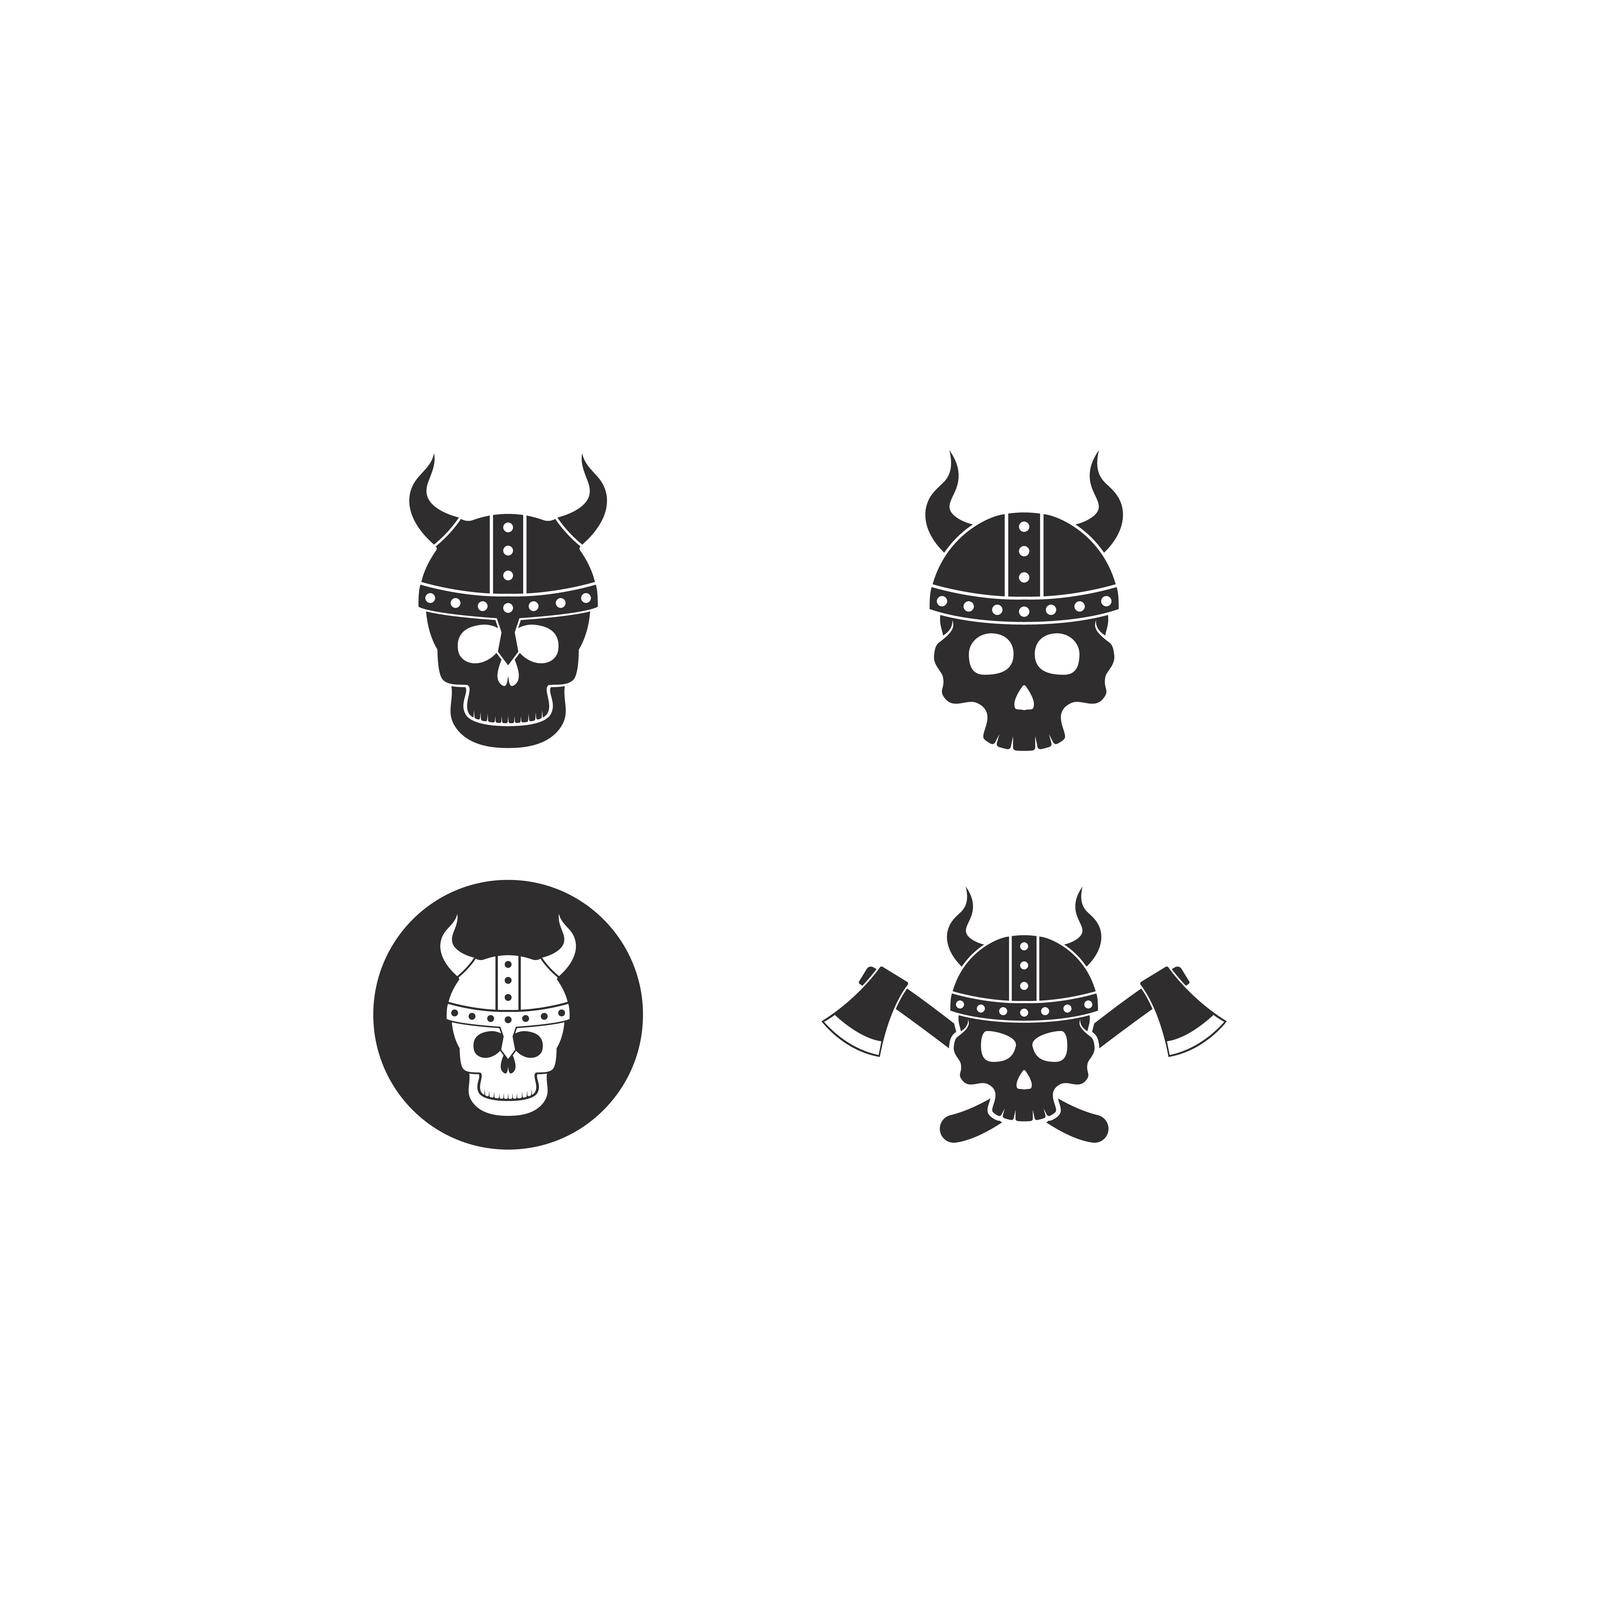 Viking skull with helmet logo vector icon illustration design